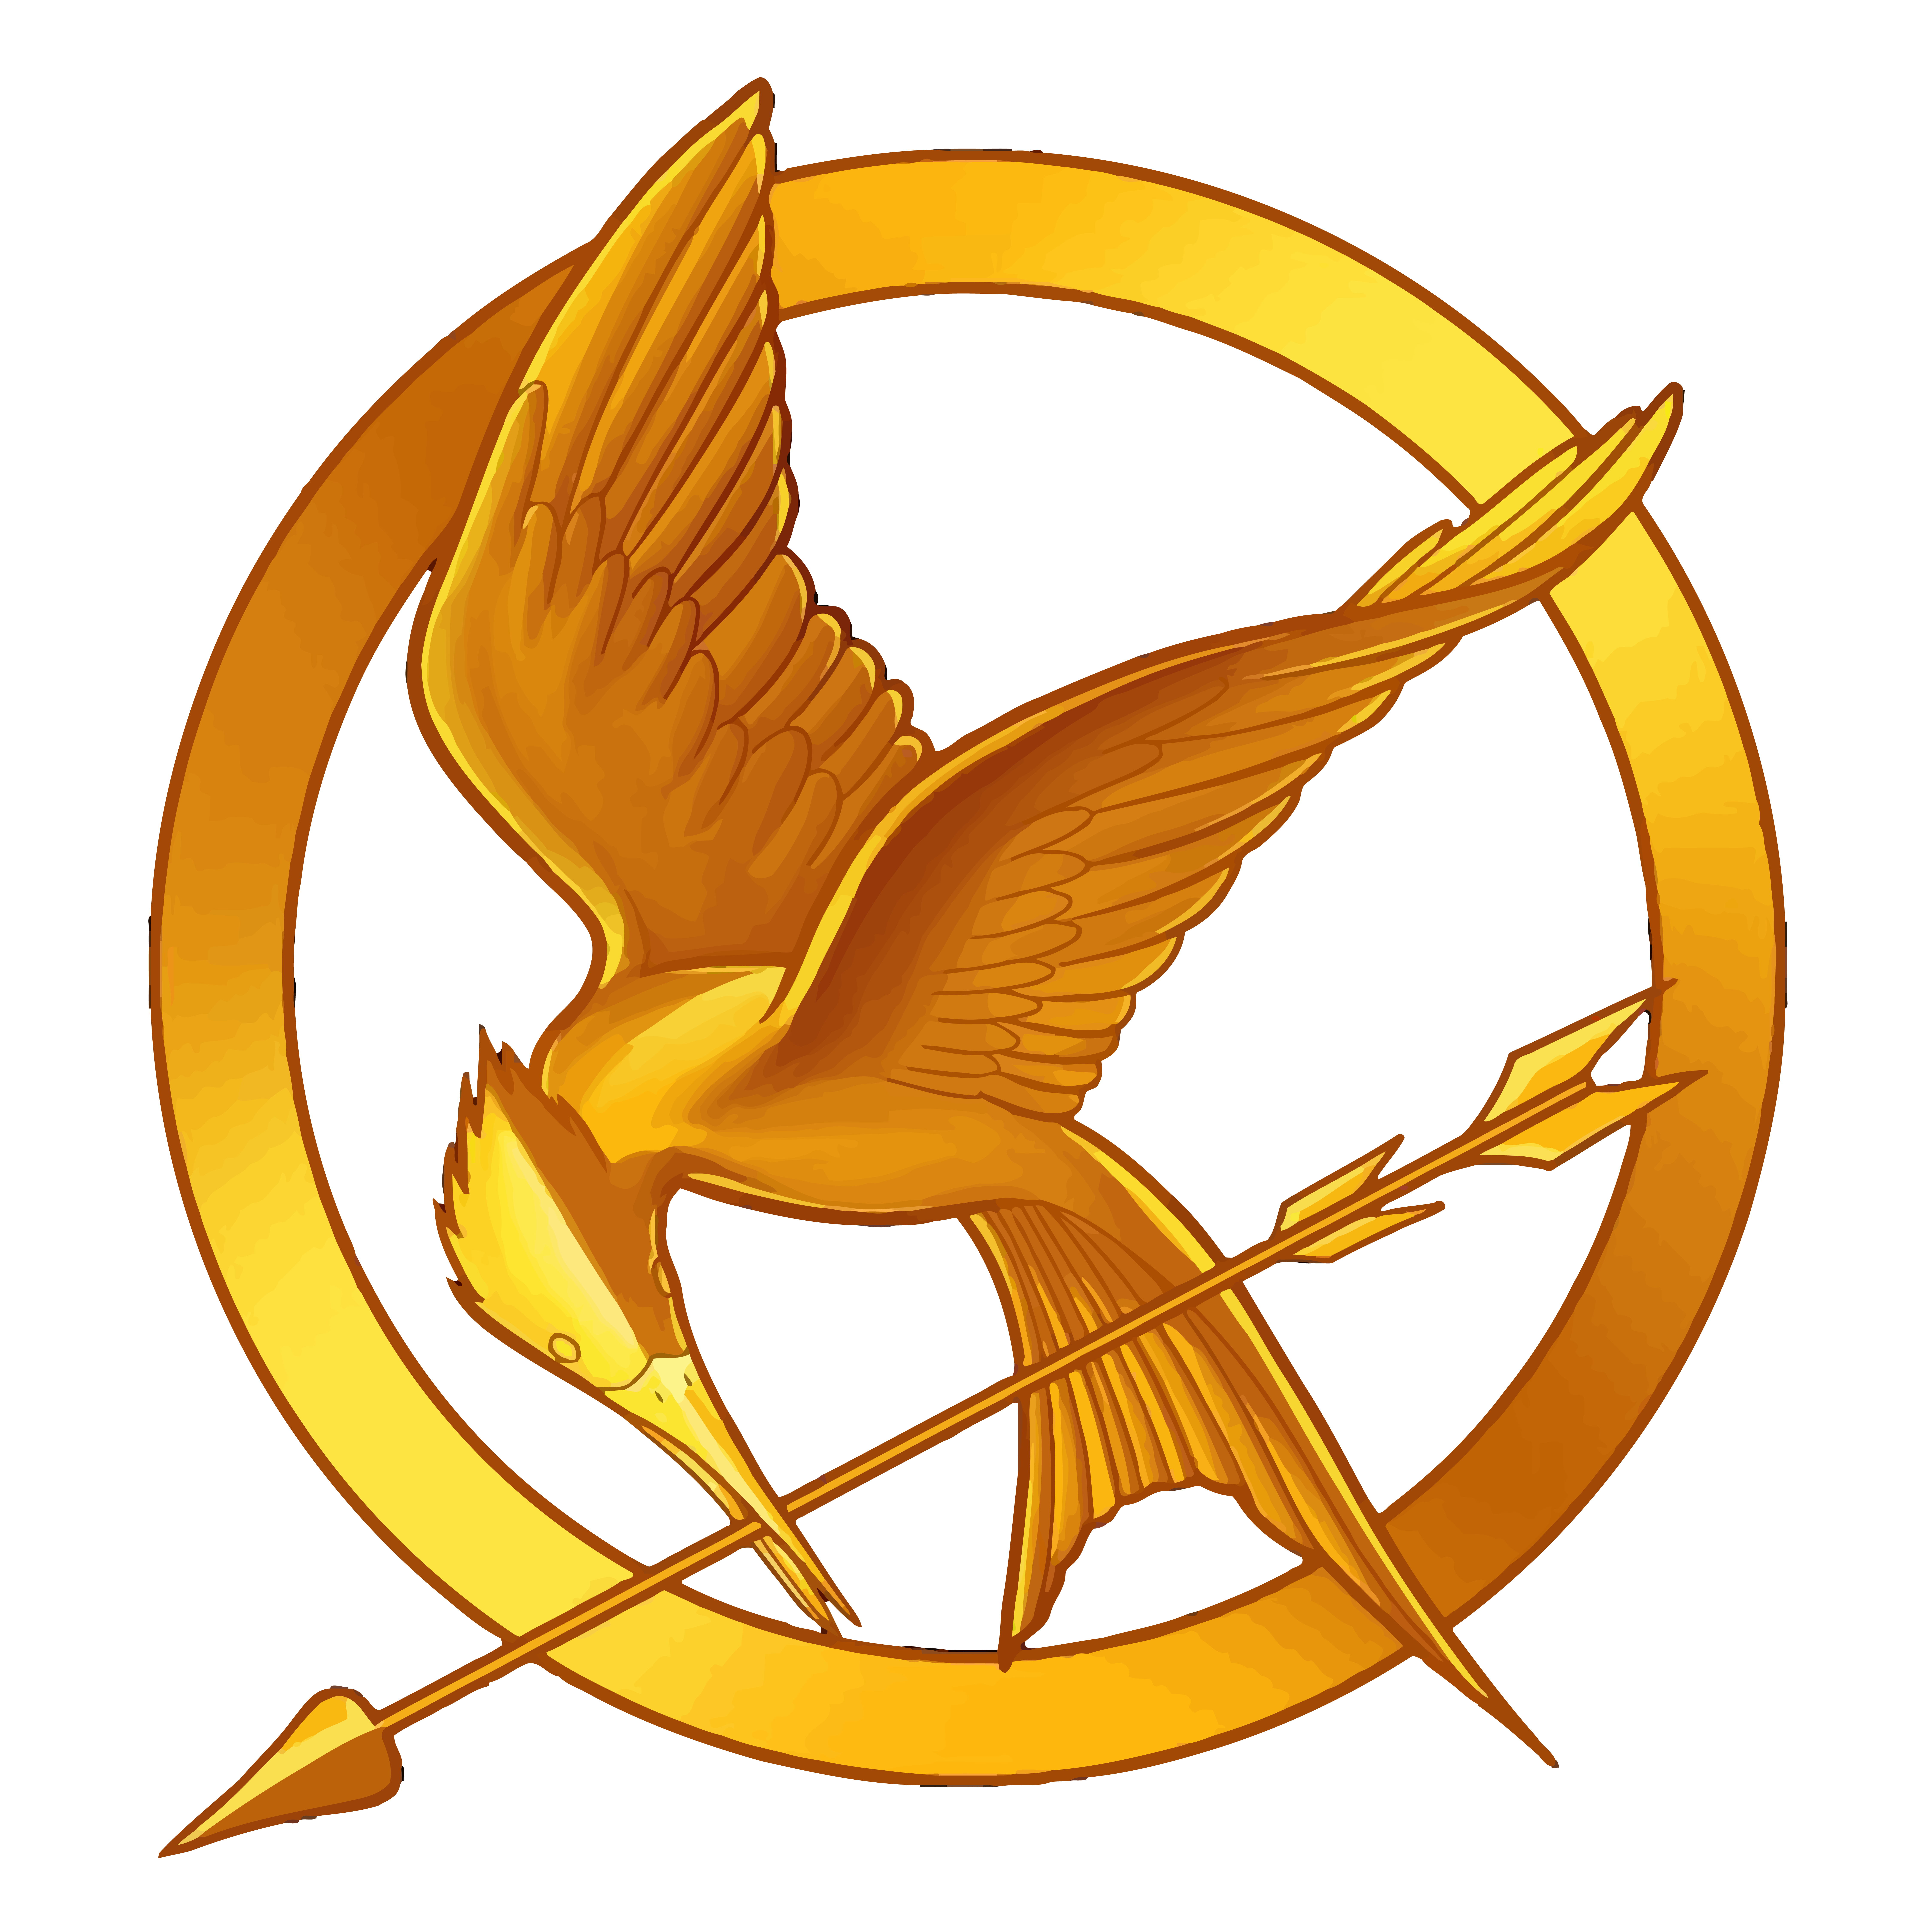 The Hunger Games (Mockingjay Emblem) by thephoenixprod on